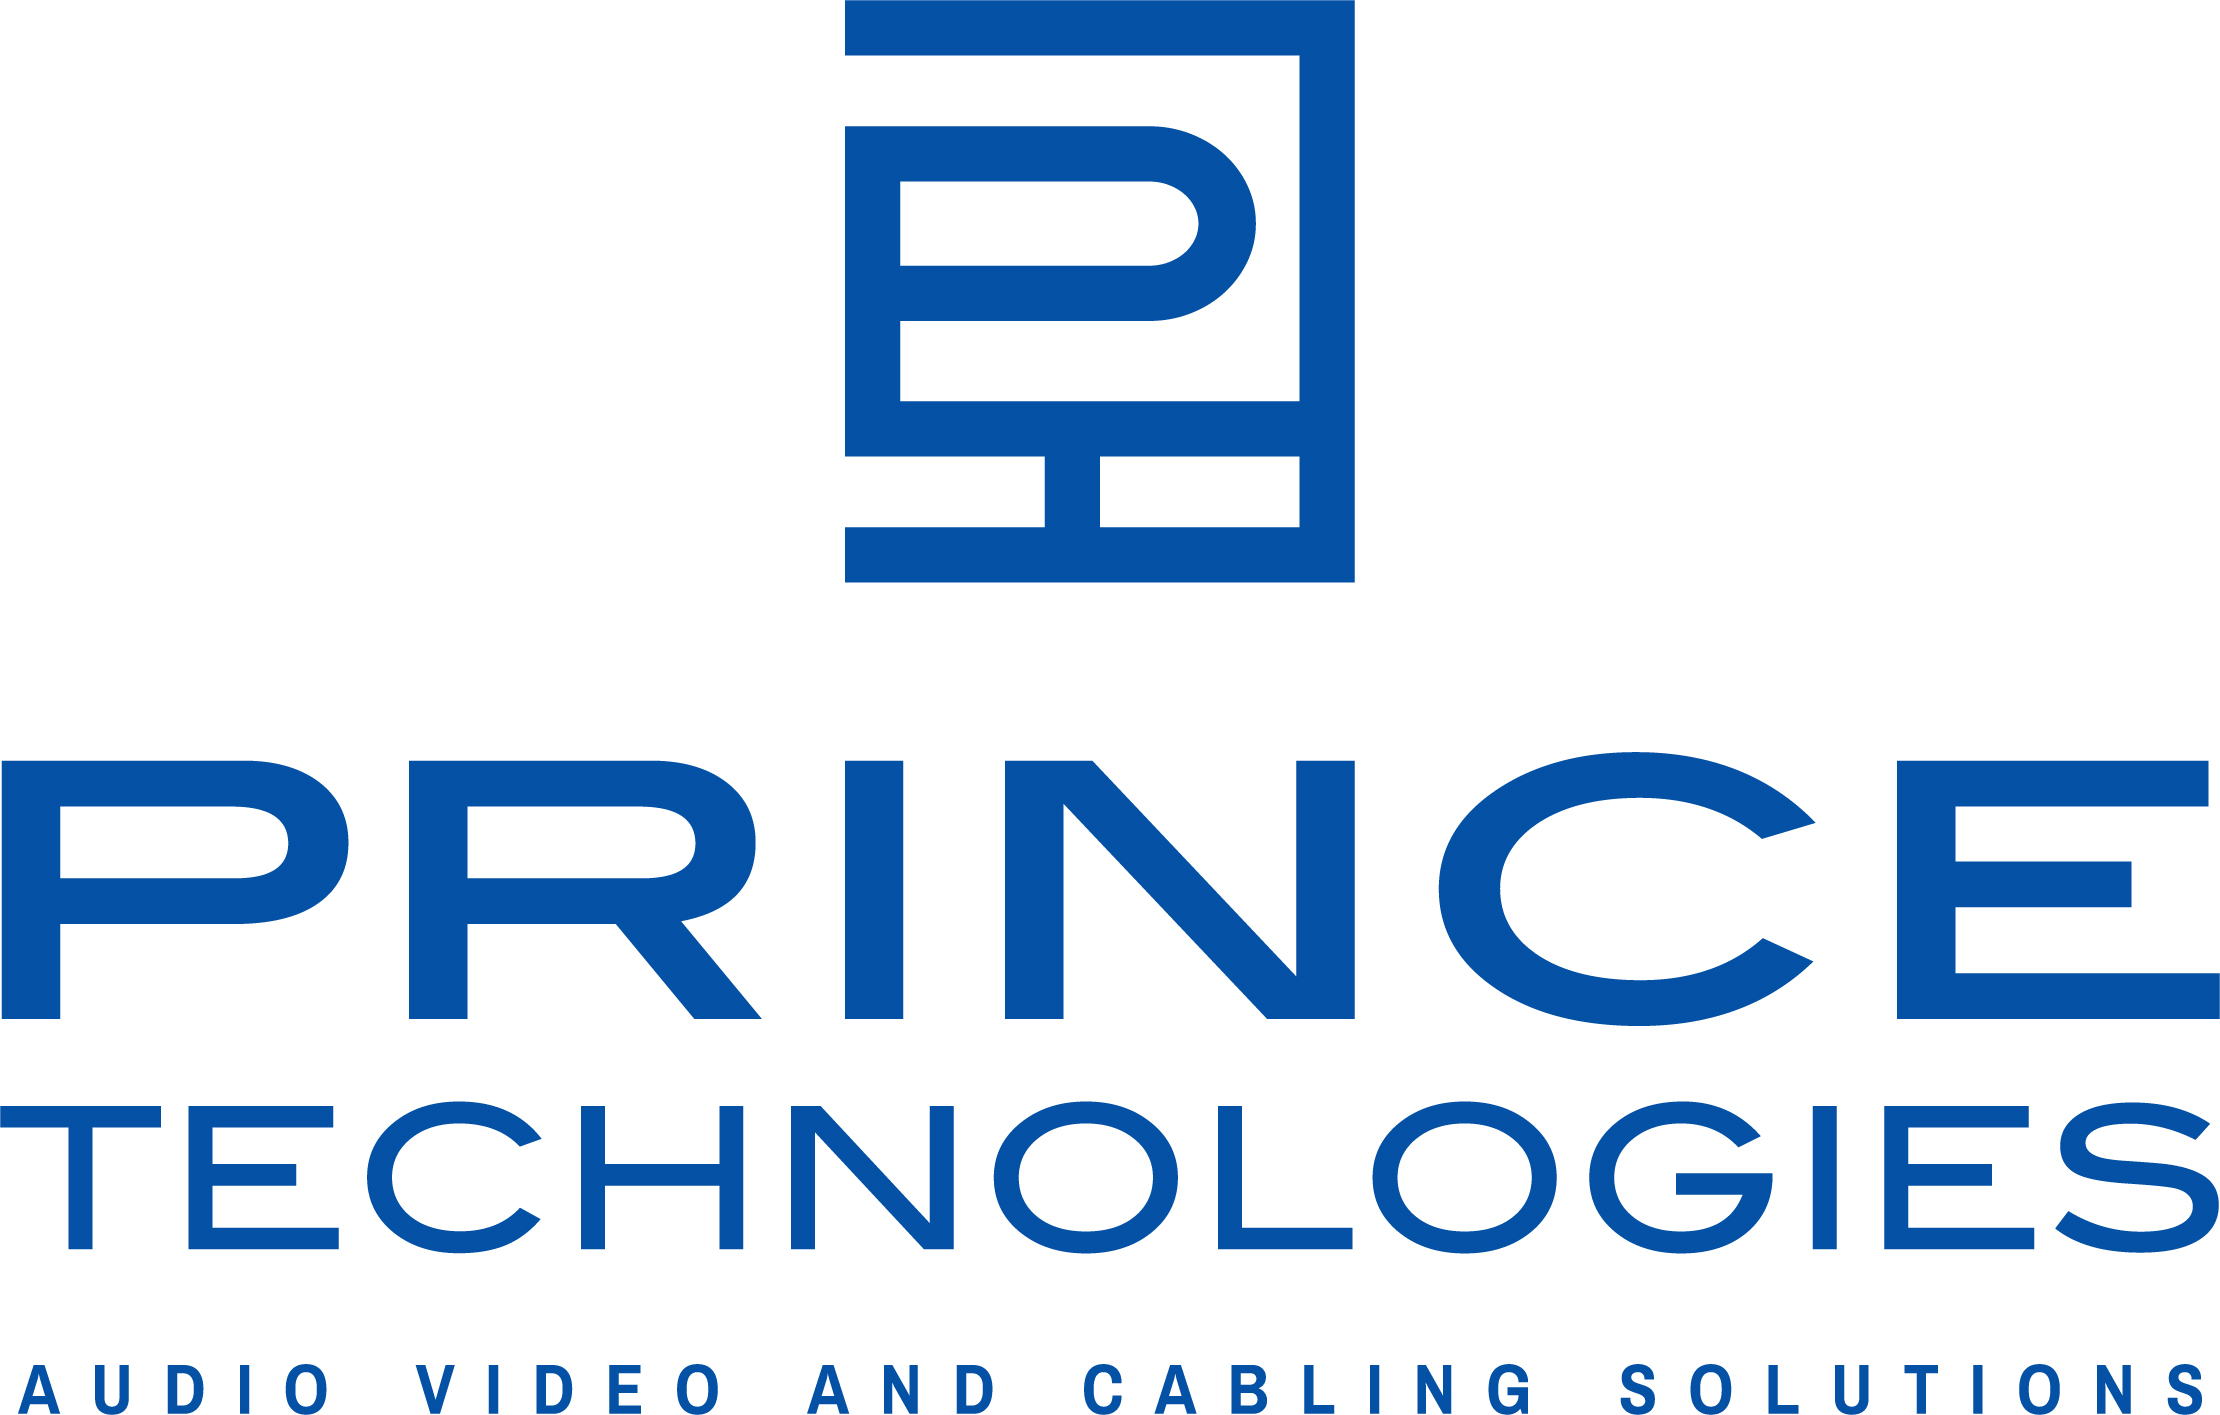 Prince Technologies, LLC